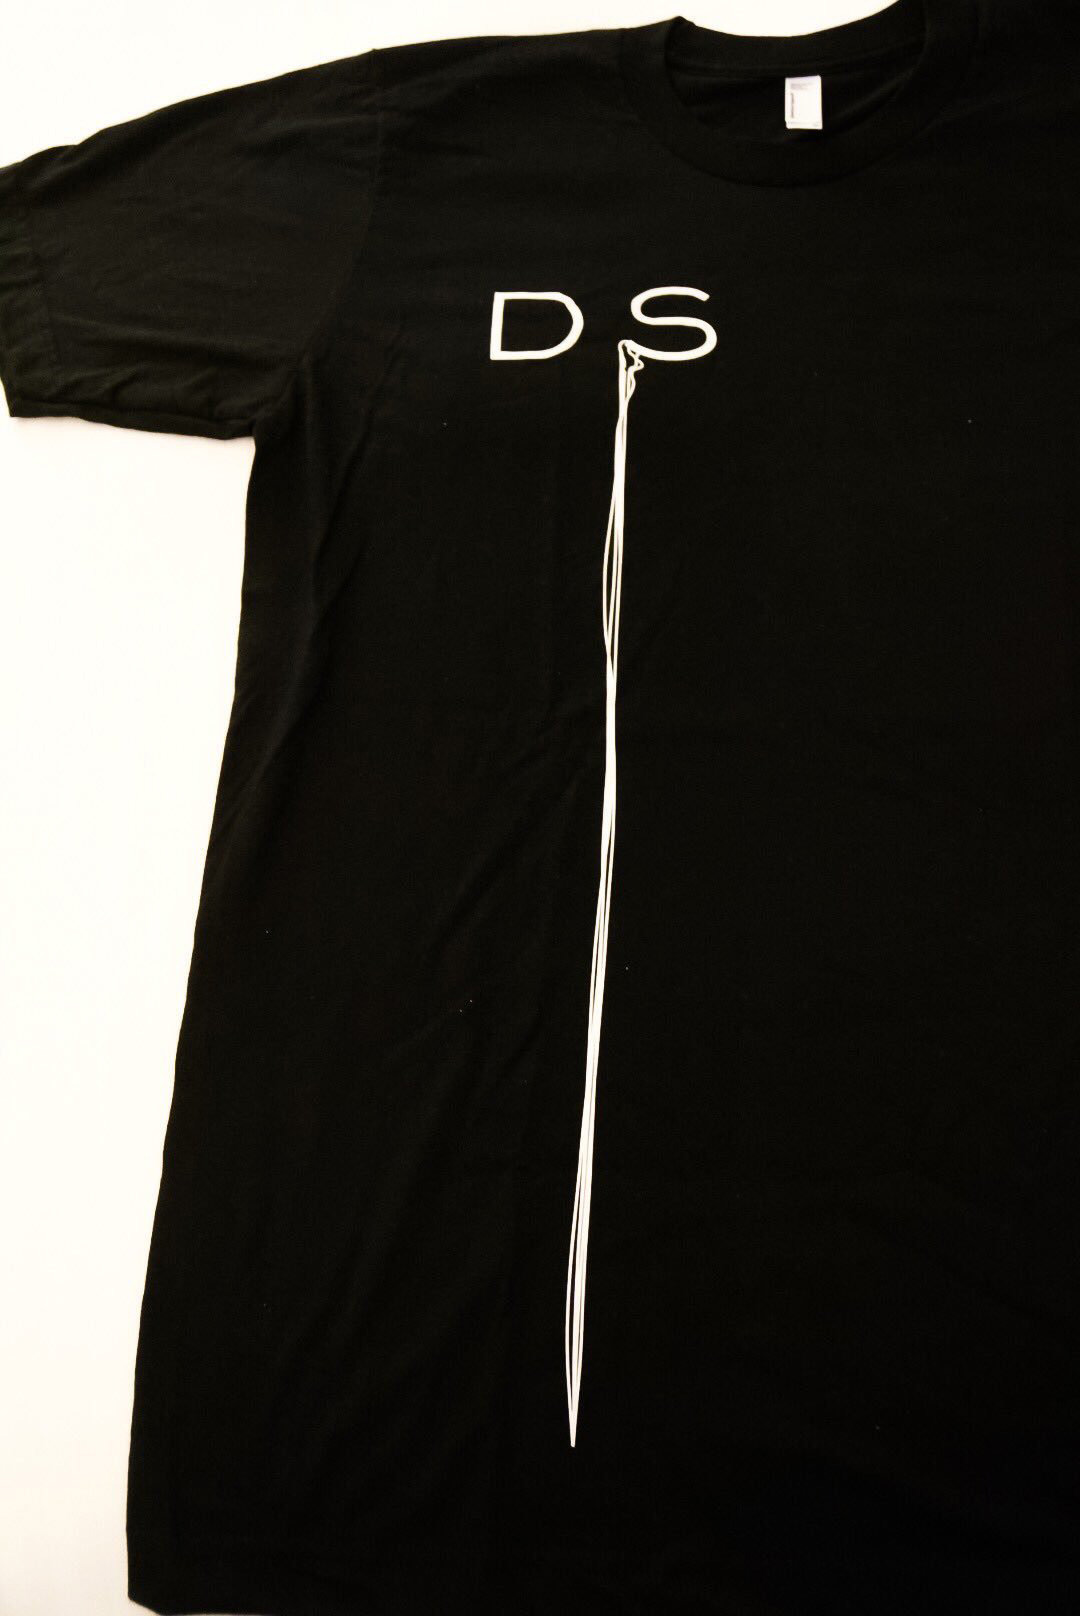 Hideo-Kojima-DS-Shirt